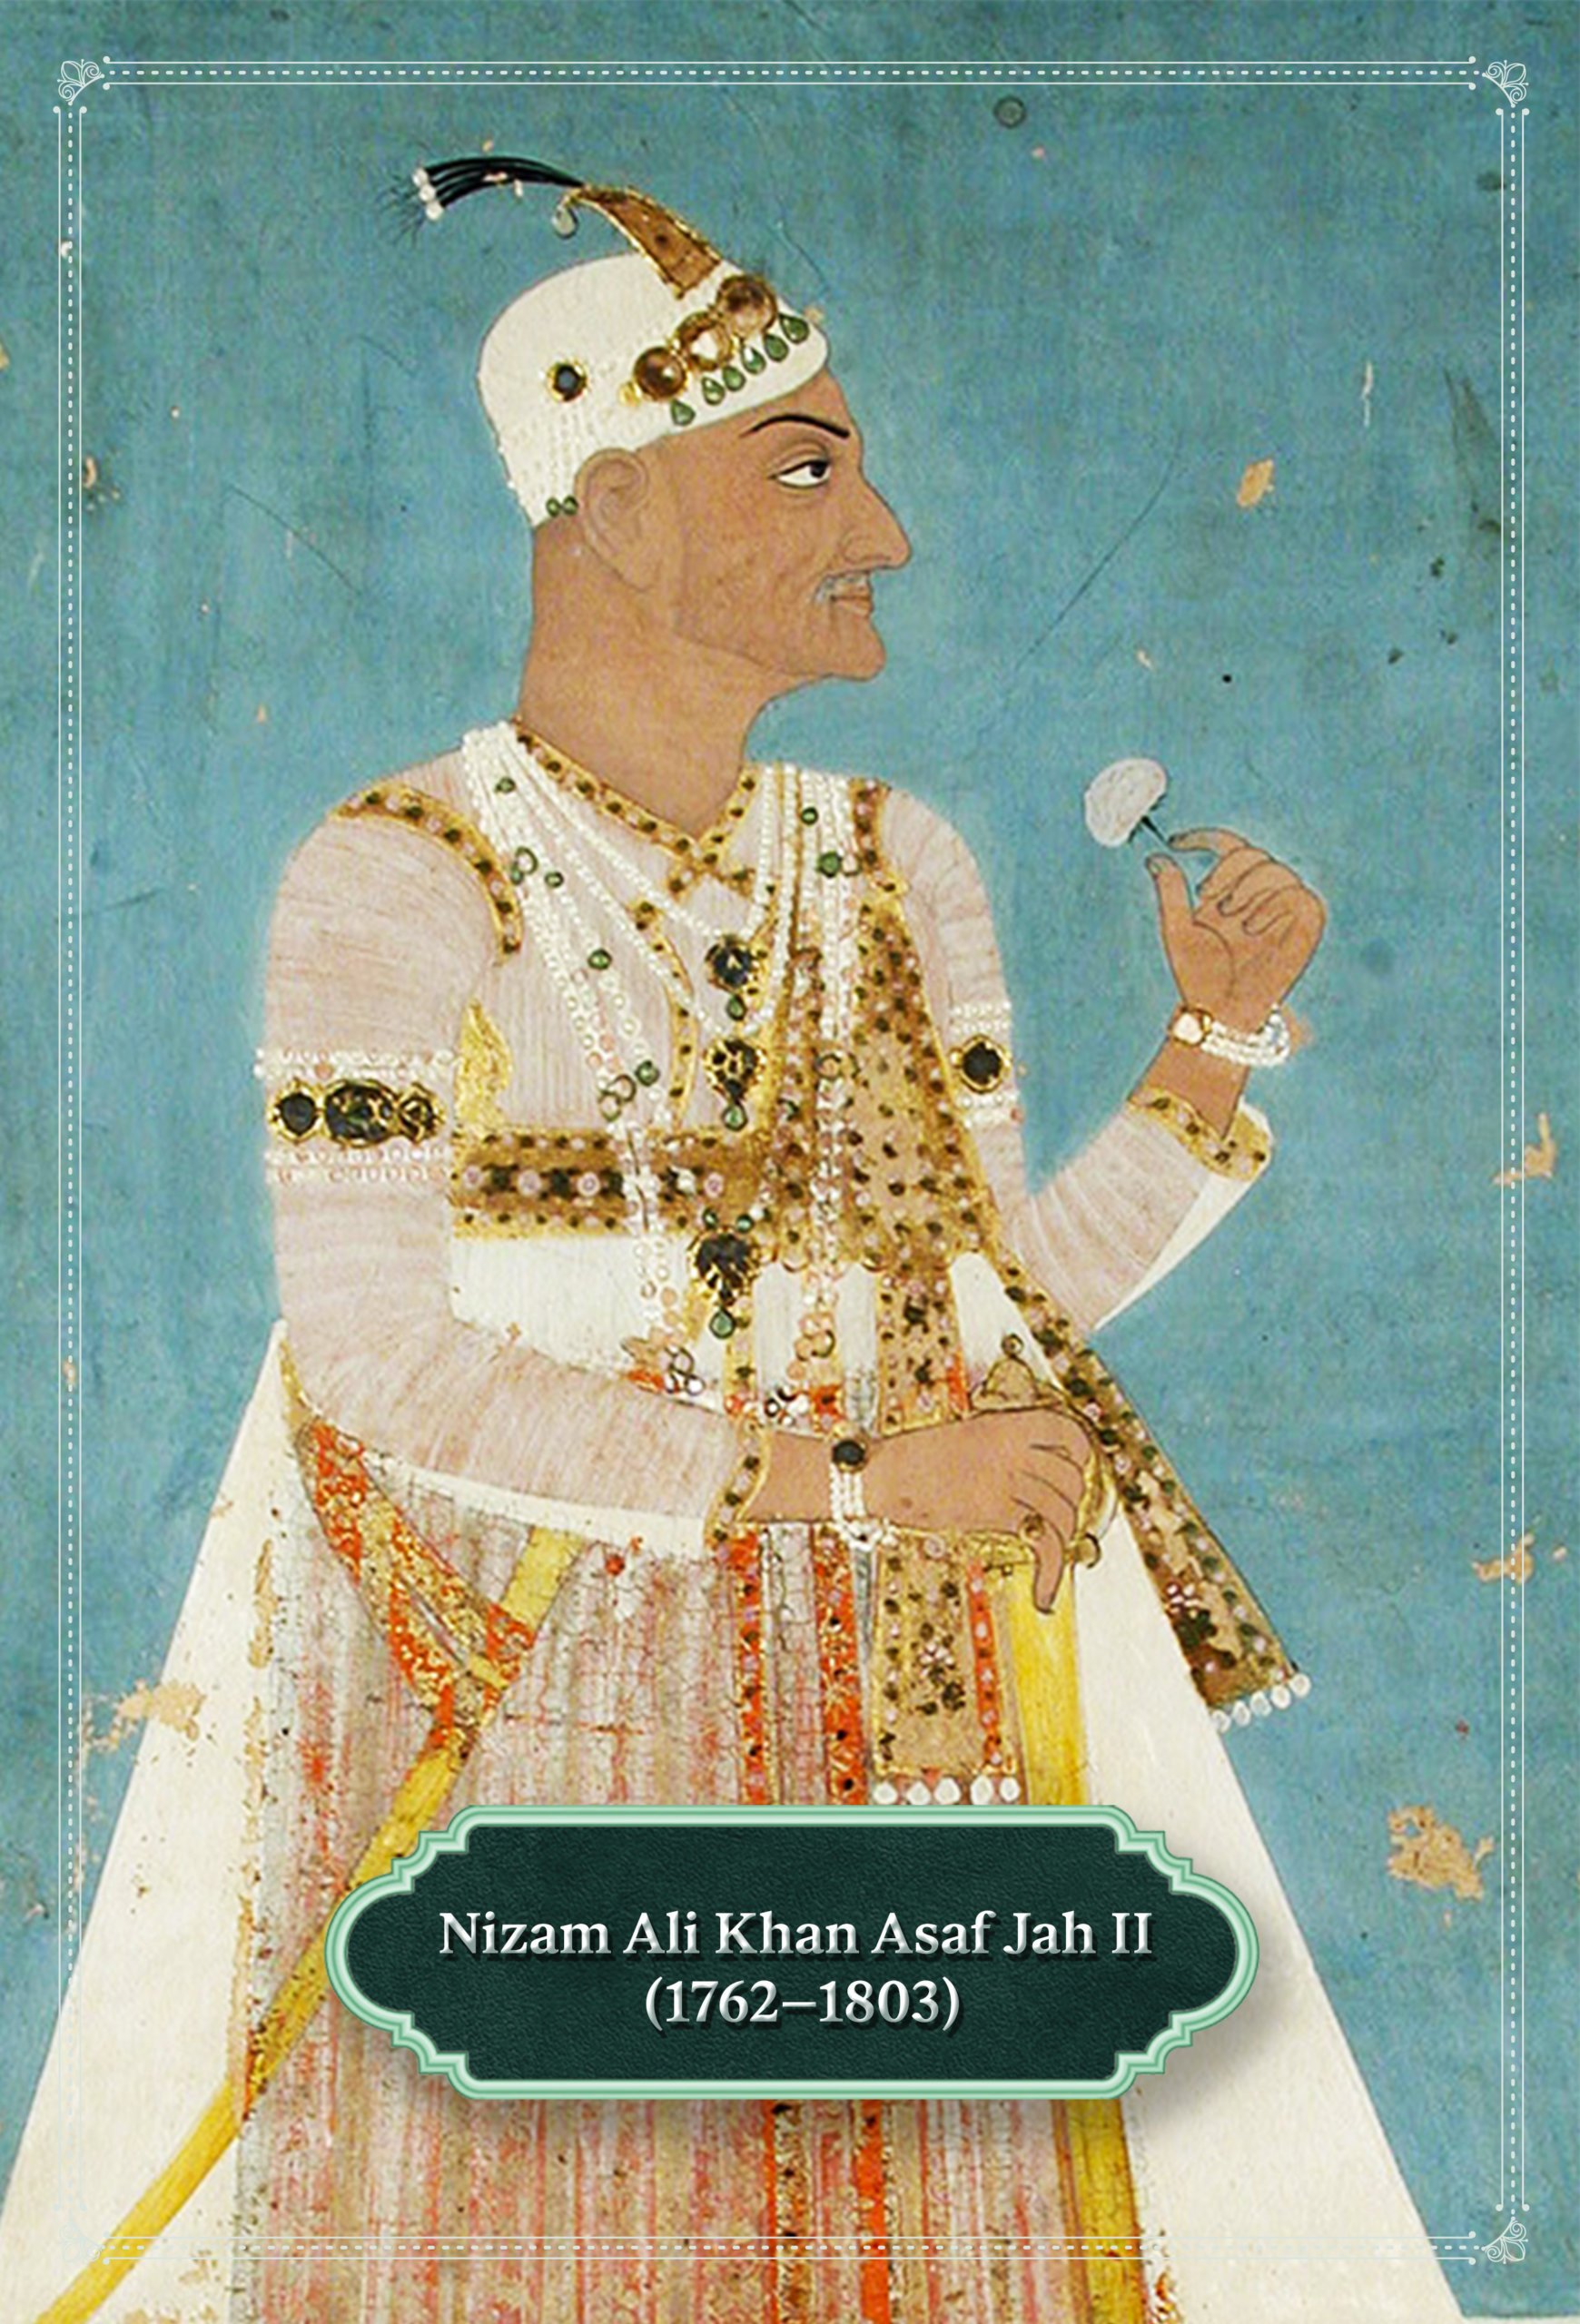 Nizam ali khan asaf jha ii wearing diamond jewellery